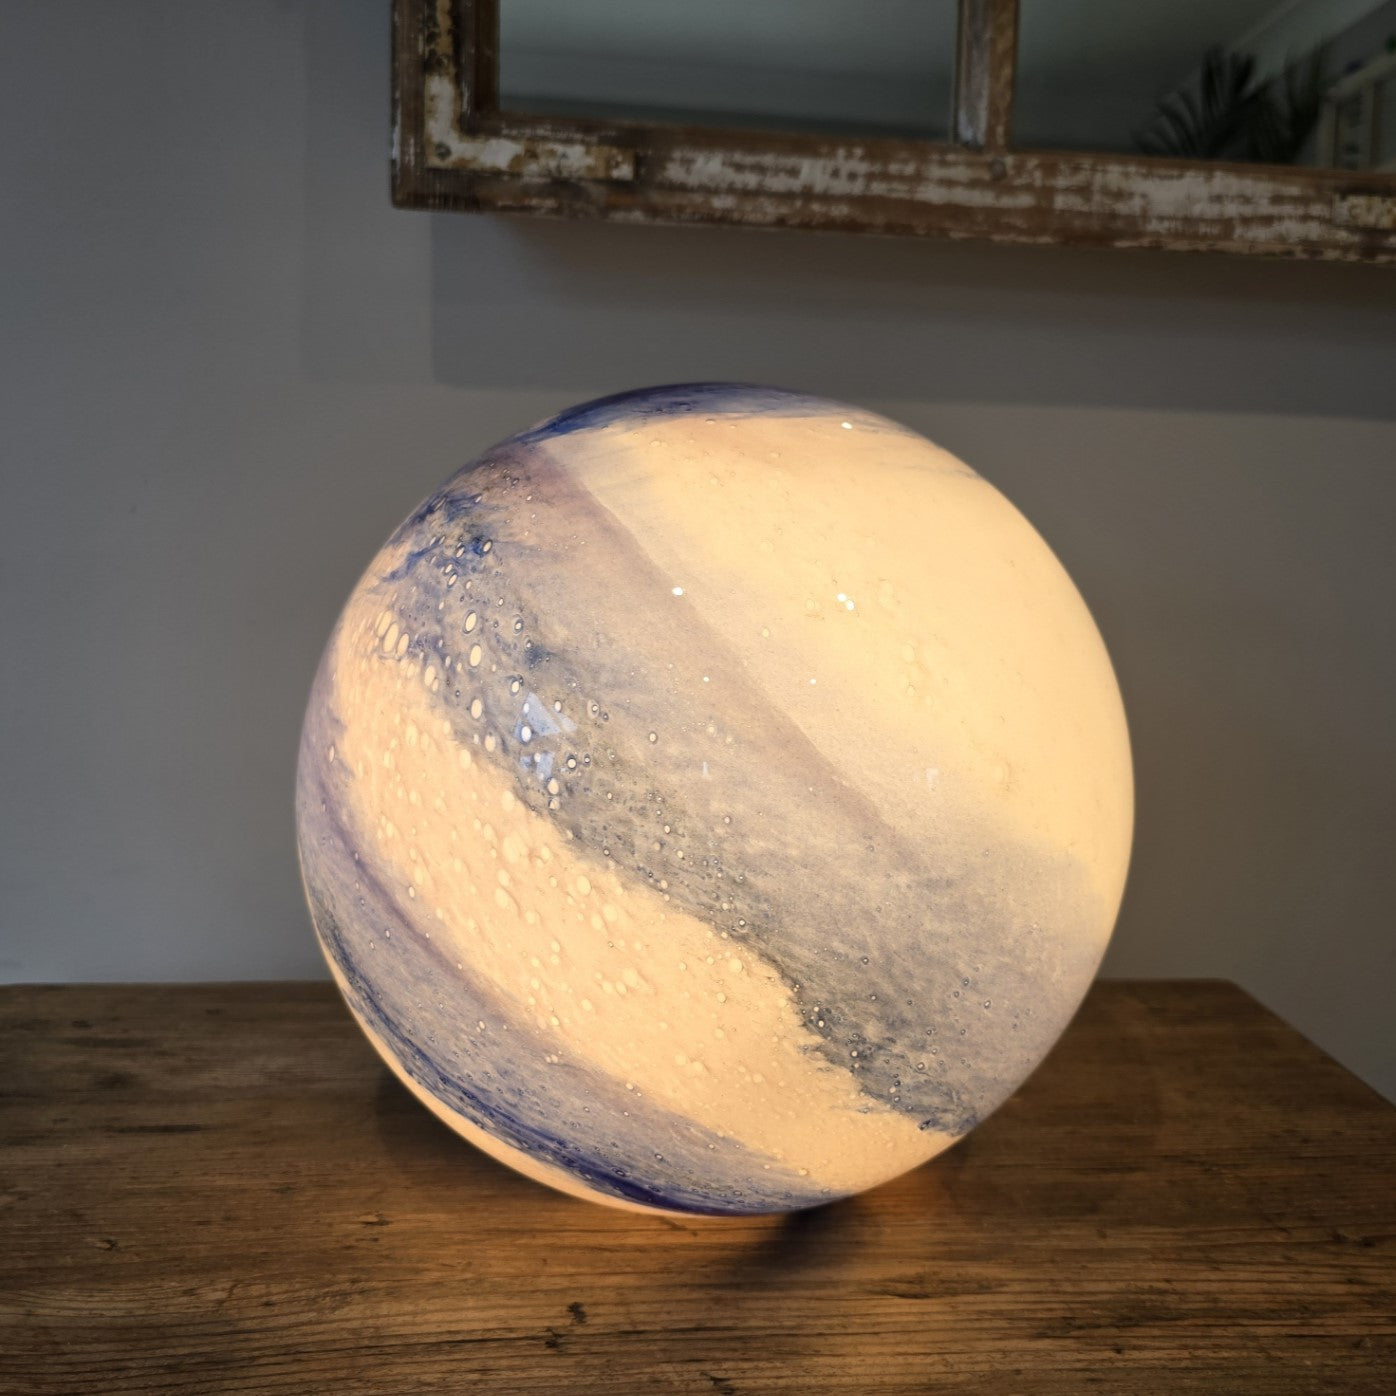 Ocean Foam Glass Lamp - Sphere Large